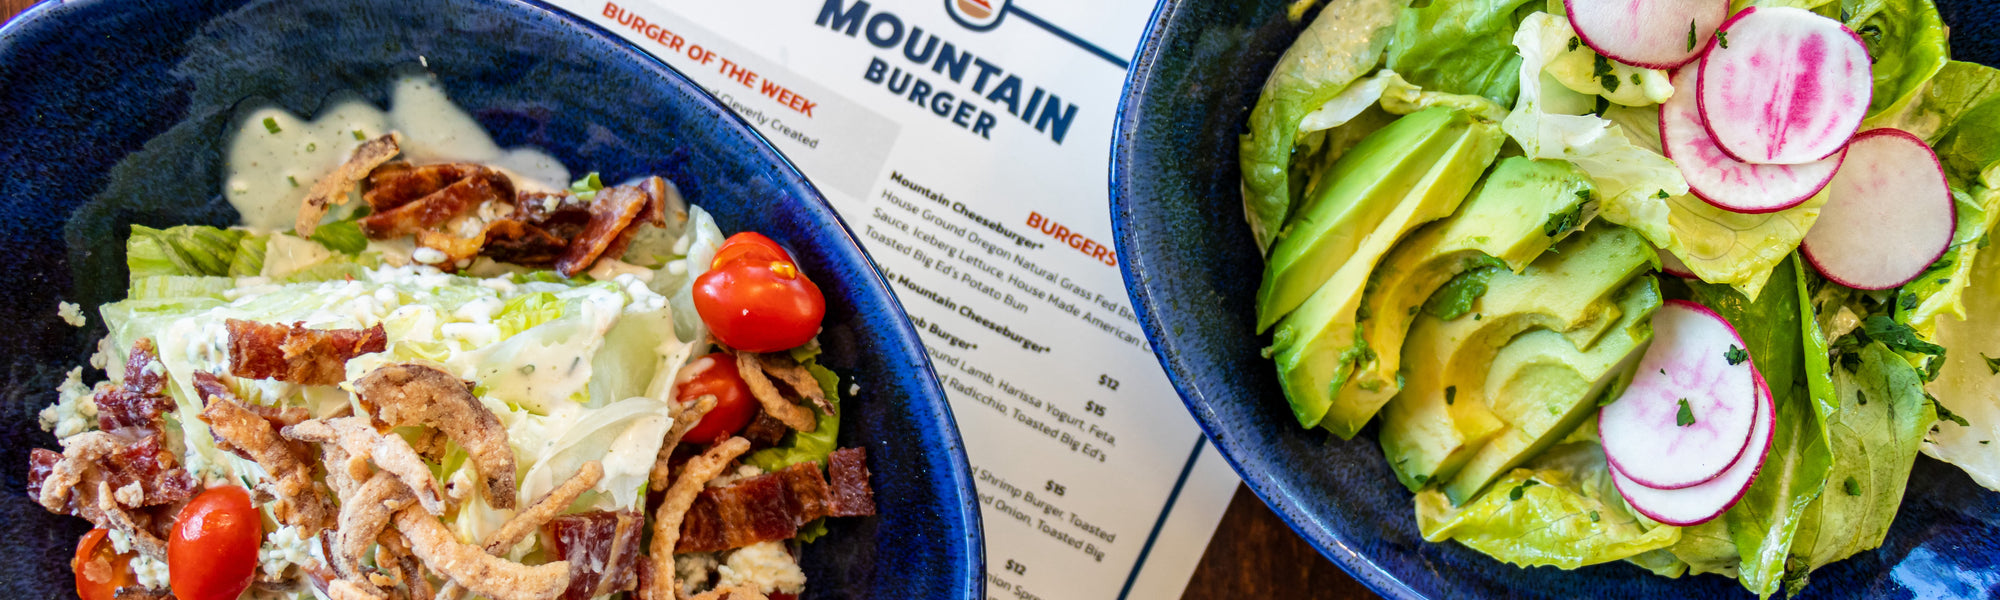 mountain burger healthy saladsds